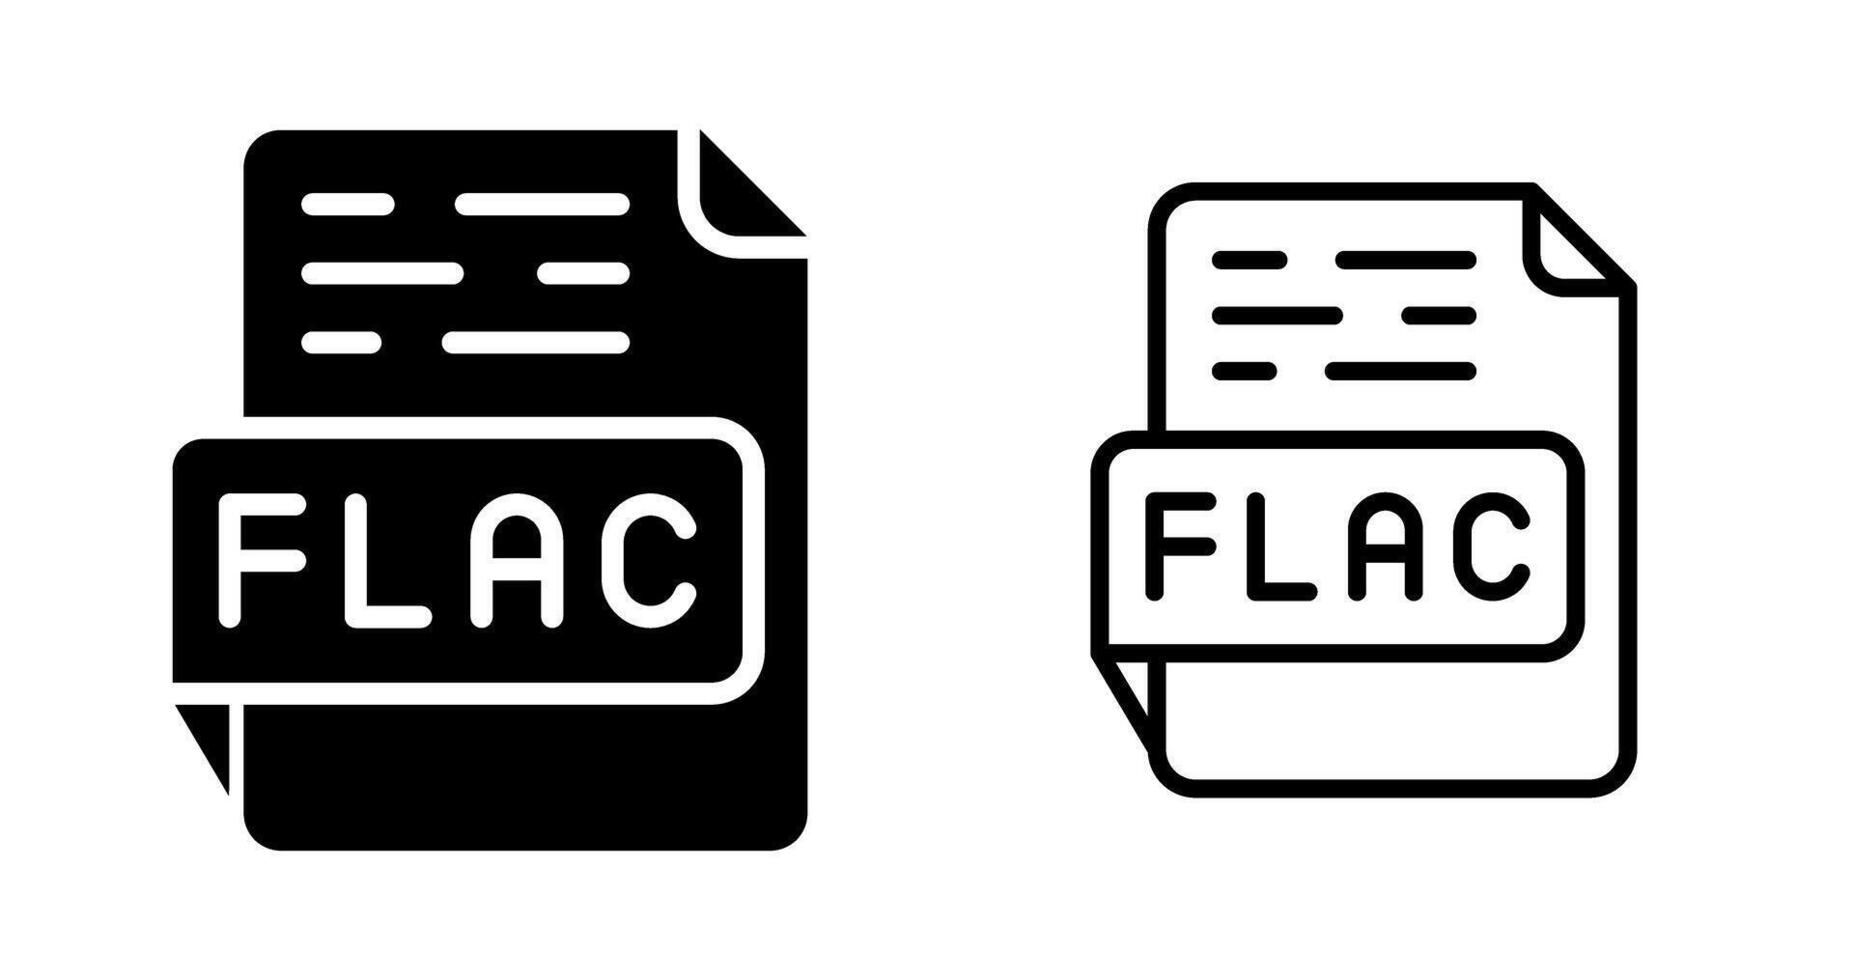 FLAC Vector Icon